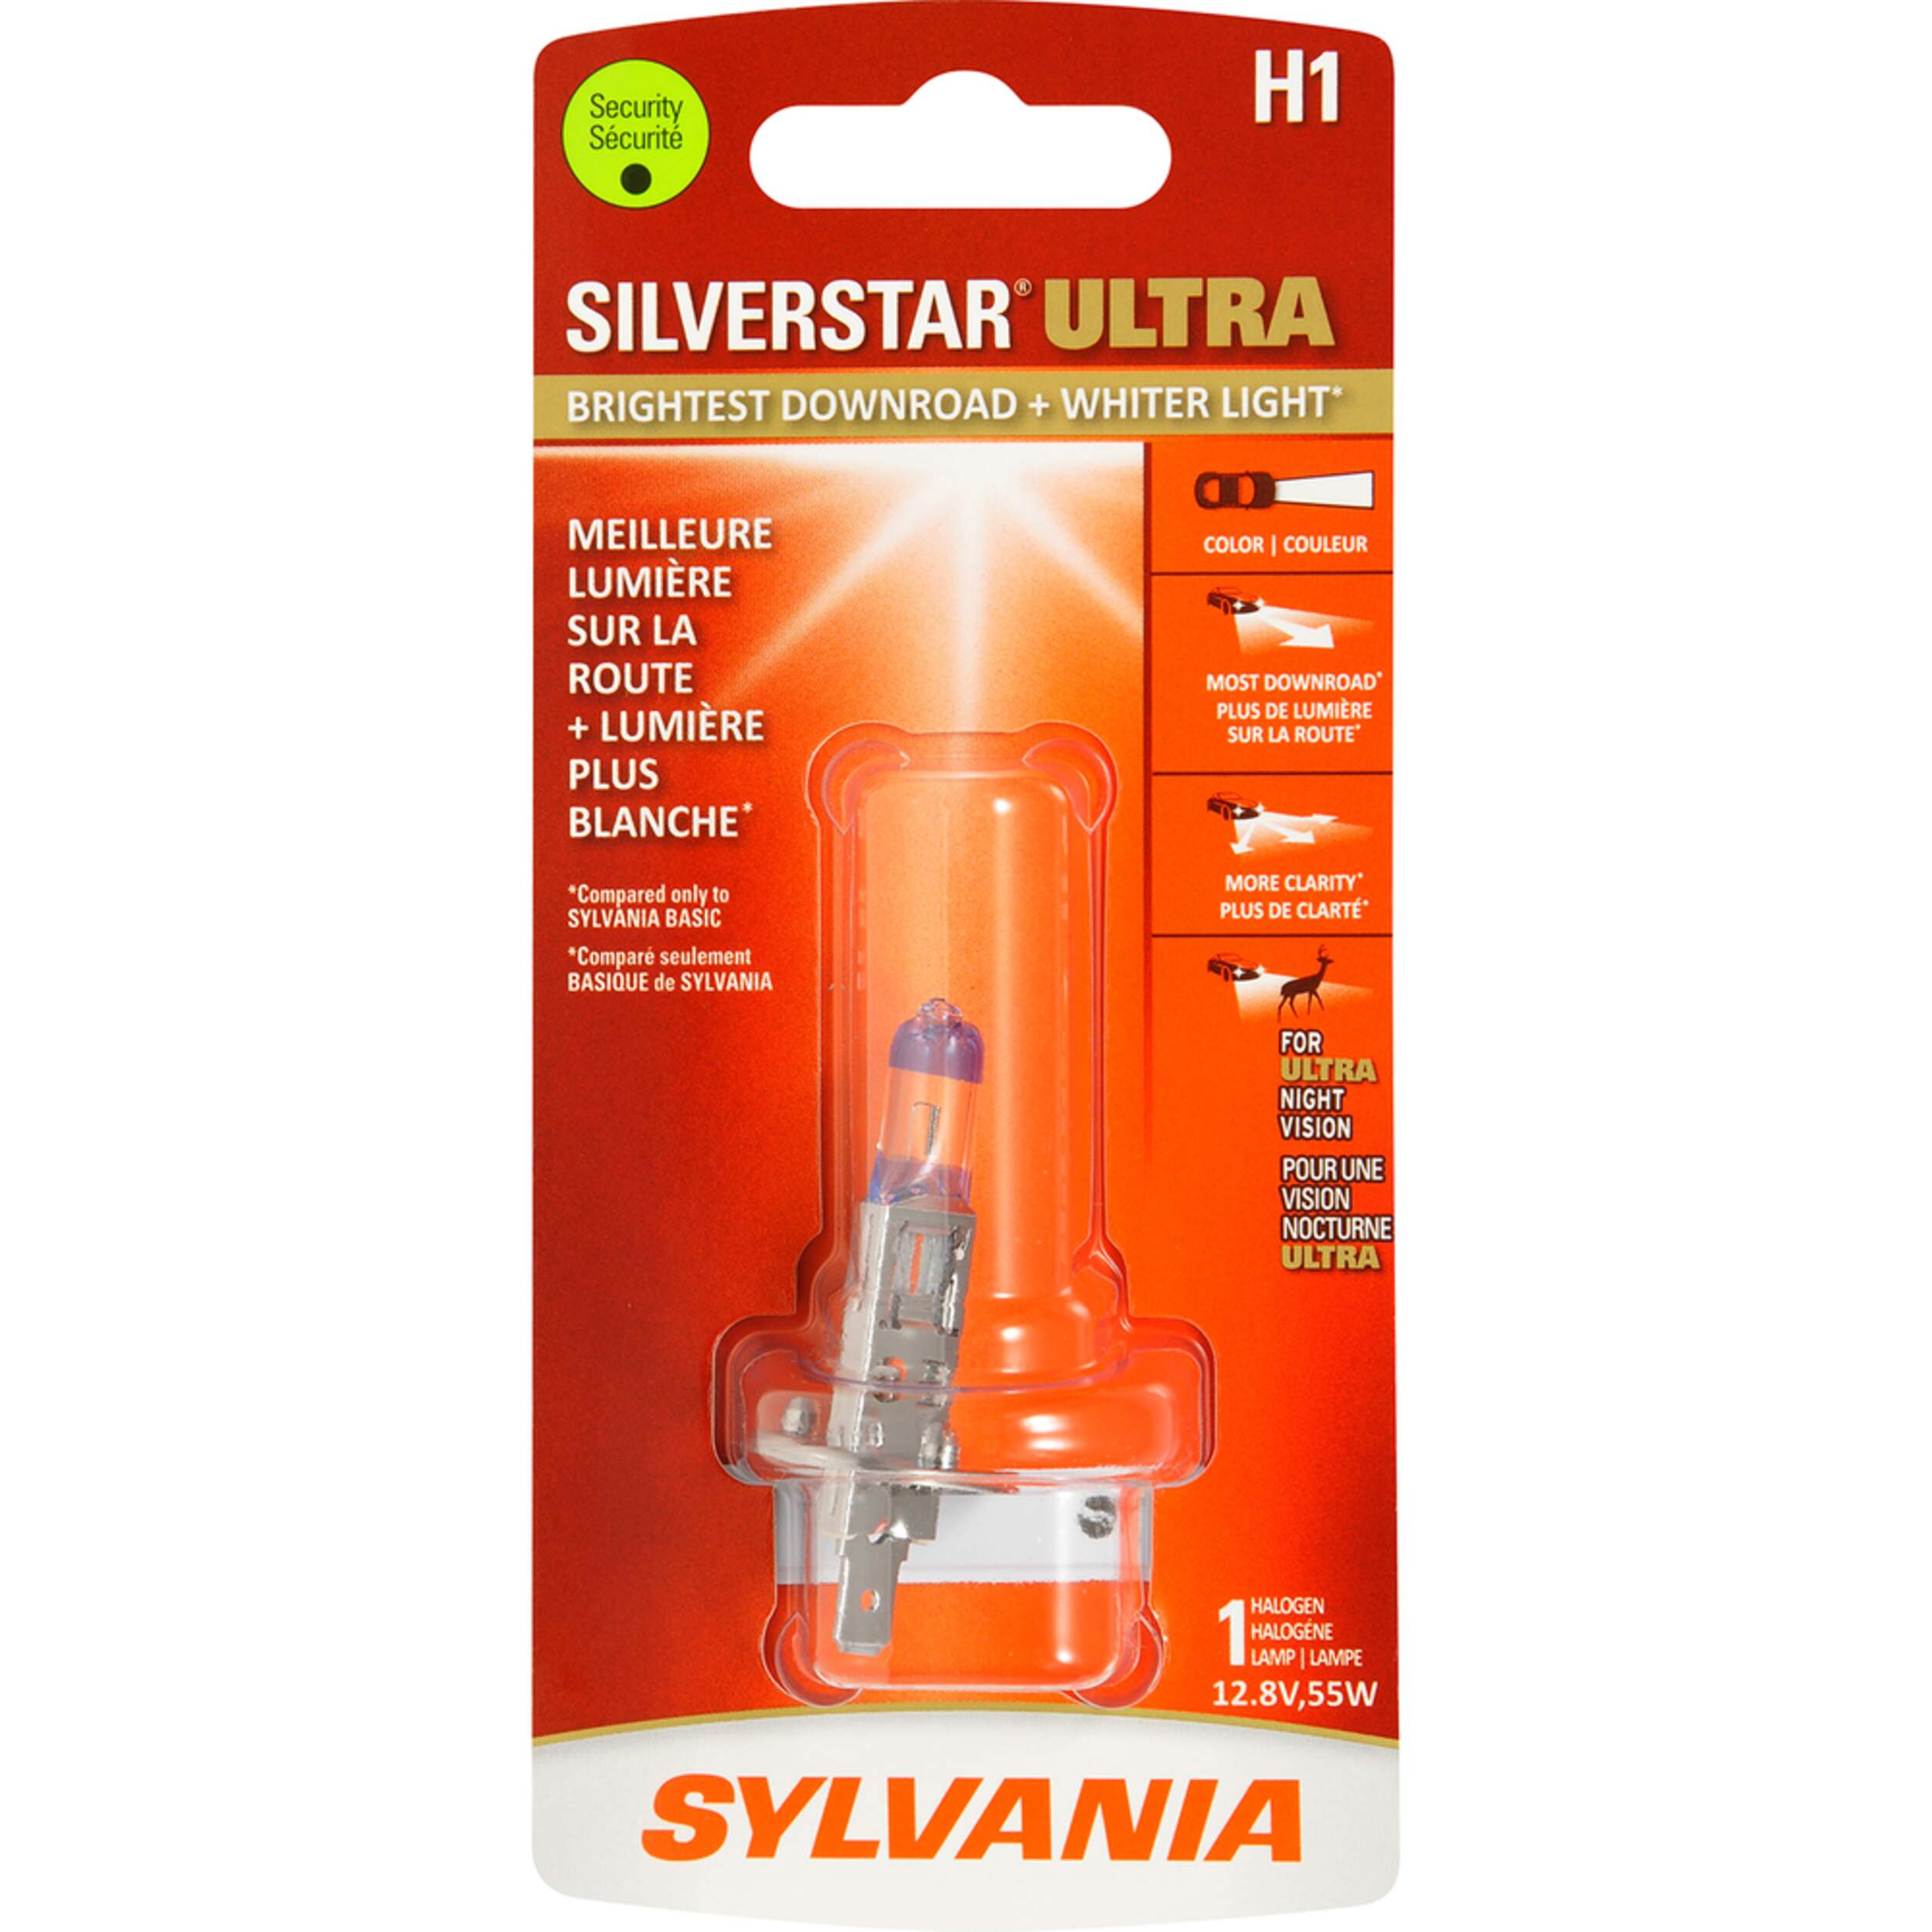 SYLVANIA H1 SilverStar ULTRA Halogen Headlight Bulb, White Light (1-pack)